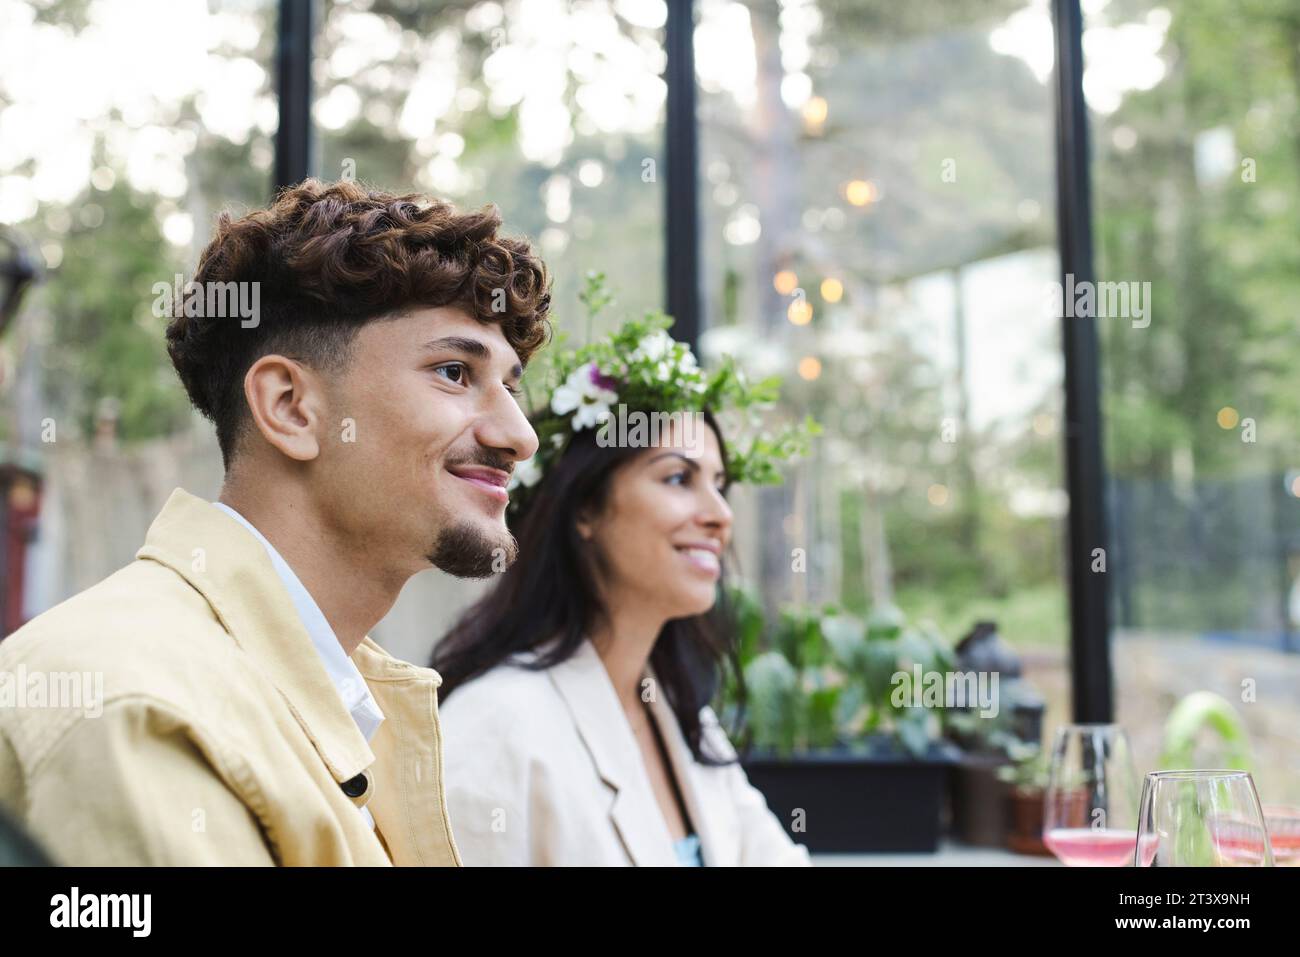 Smiling man sitting by woman wearing tiara at dinner party Stock Photo